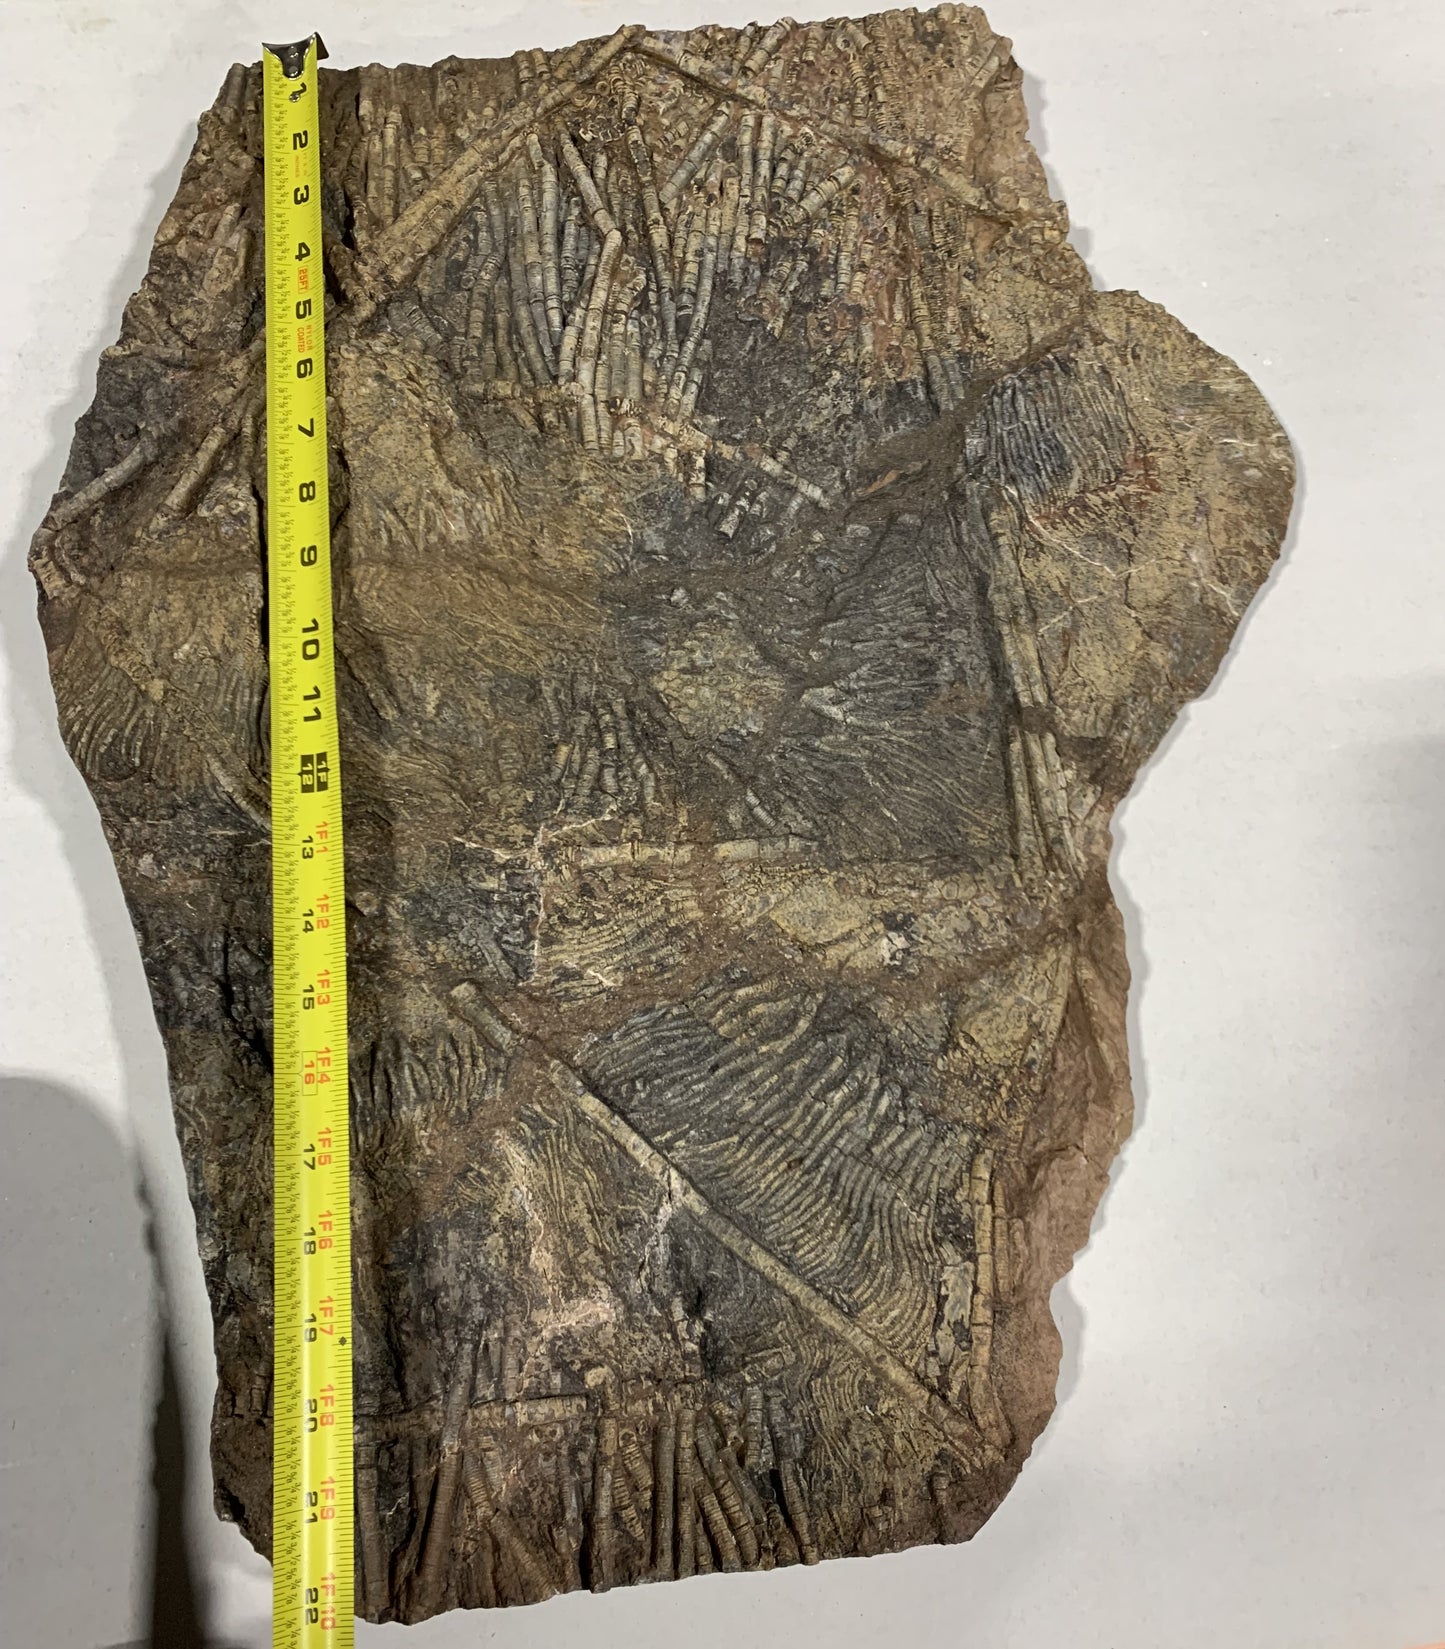 Giant Crinoid Plate